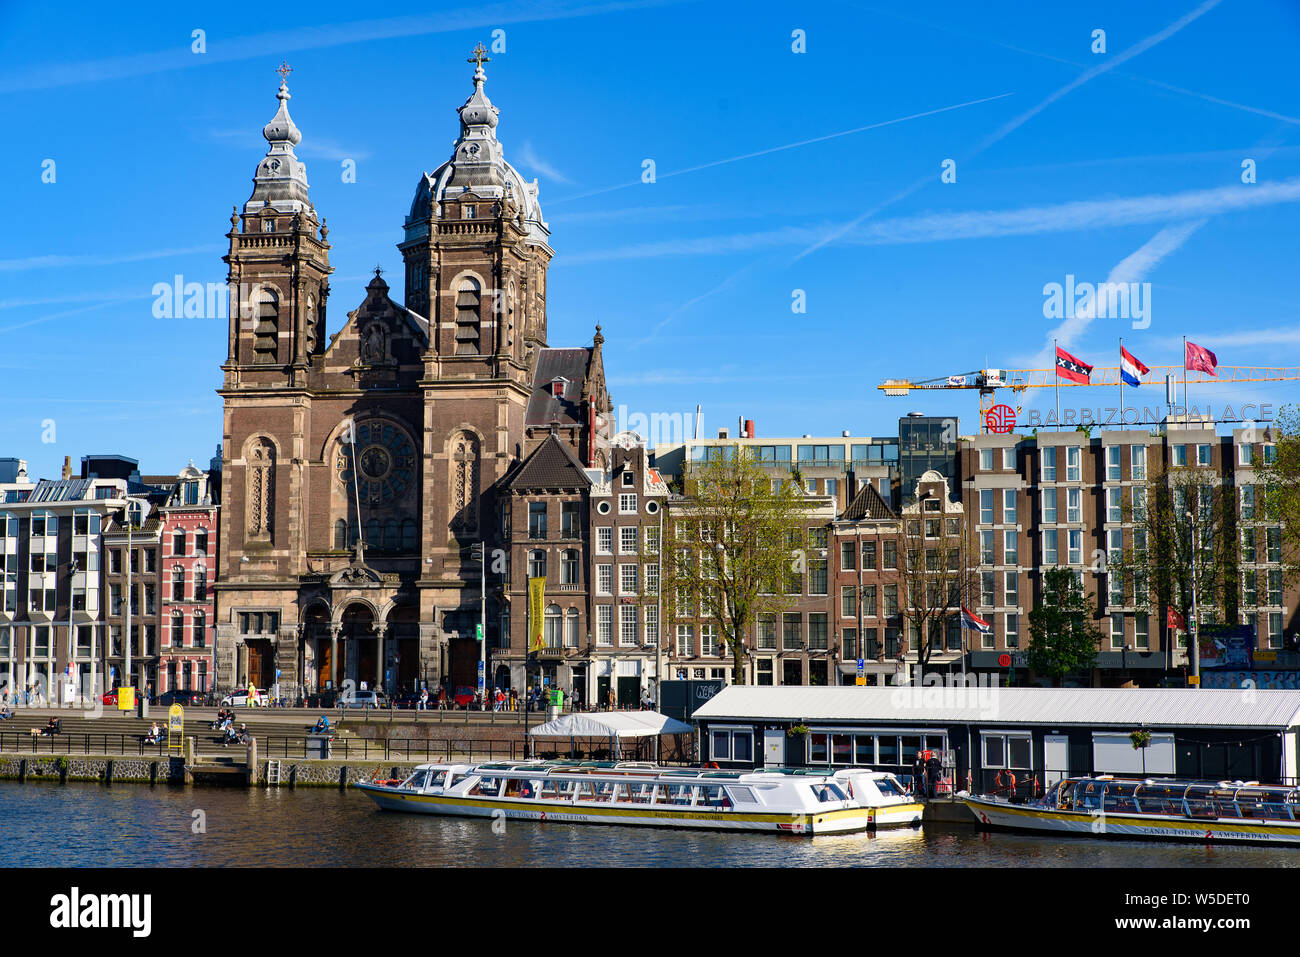 Basilica of Saint Nicholas, the primary Catholic church in Amsterdam, Netherlands Stock Photo